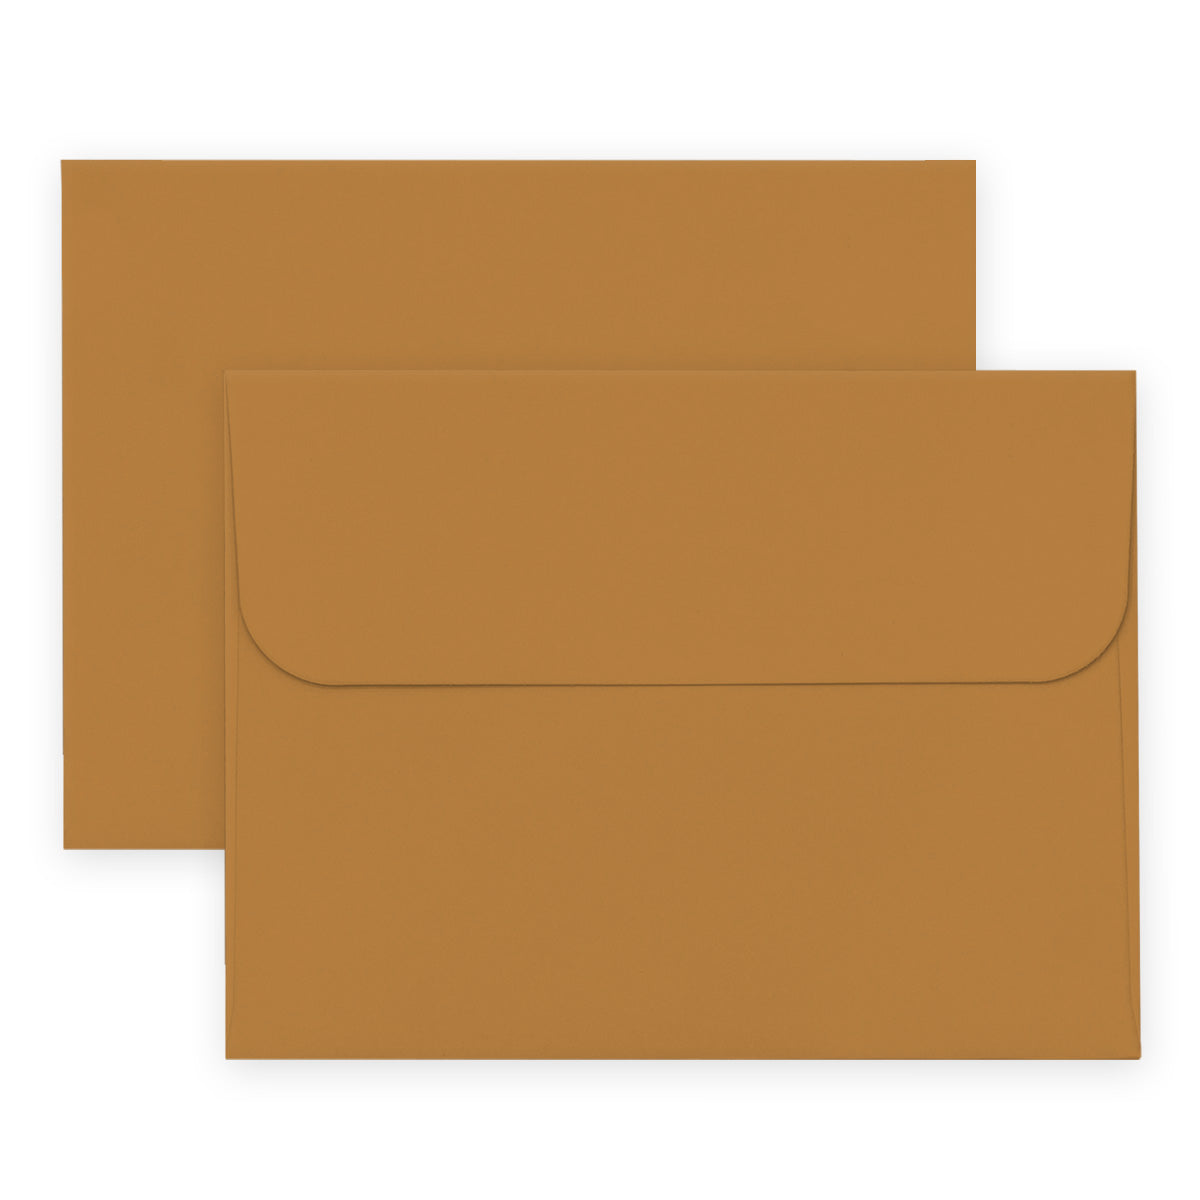 Envelope Bundle Crafty Necessities: Fall Harvest Envelope Bundle